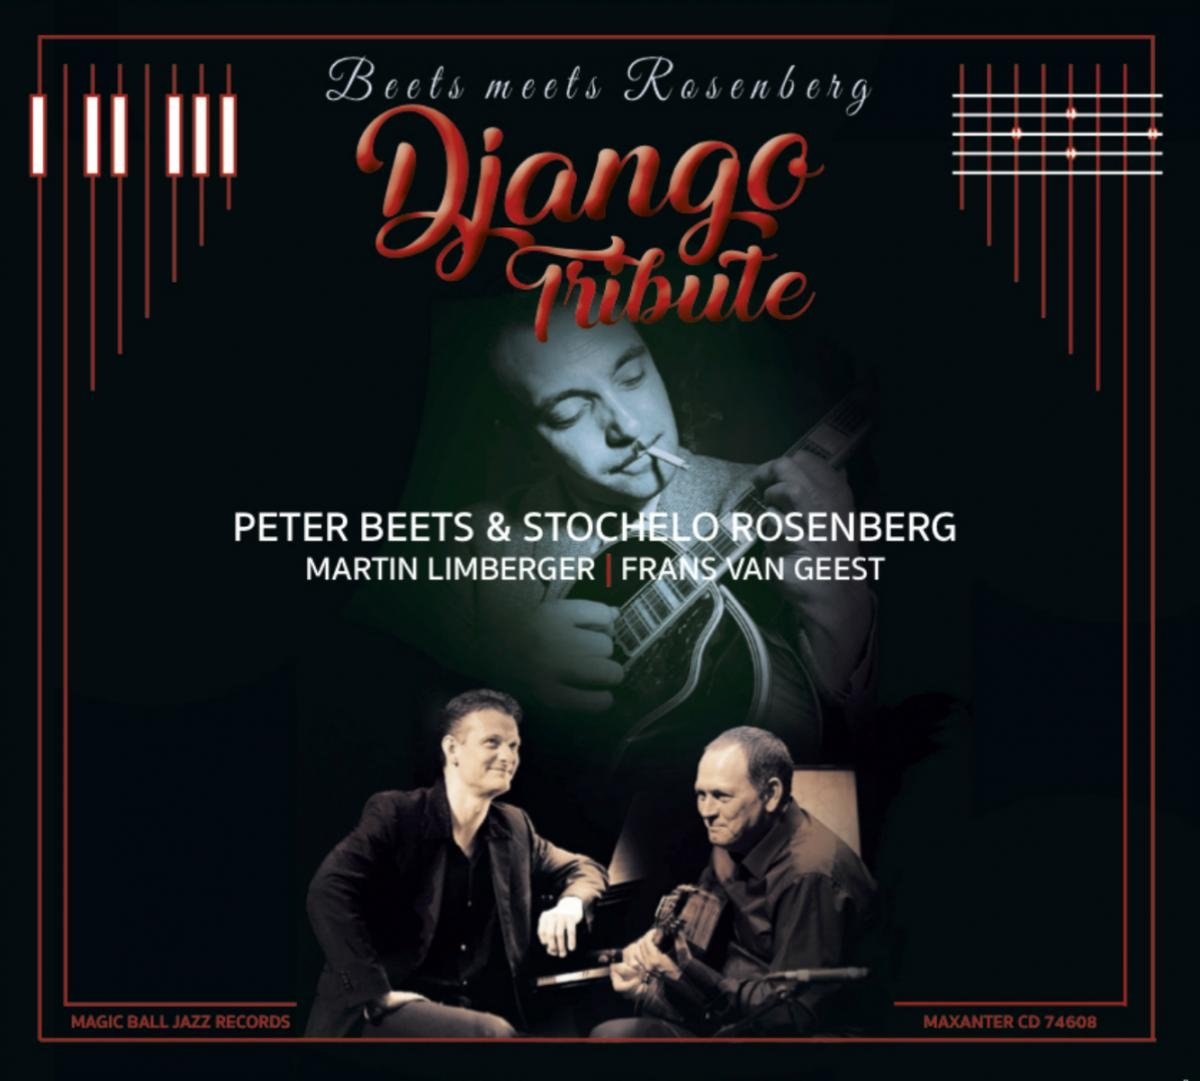 PETER BEETS - Peter Beets & Stochelo Rosenberg : Beets meets Rosenberg - Django Tribute cover 